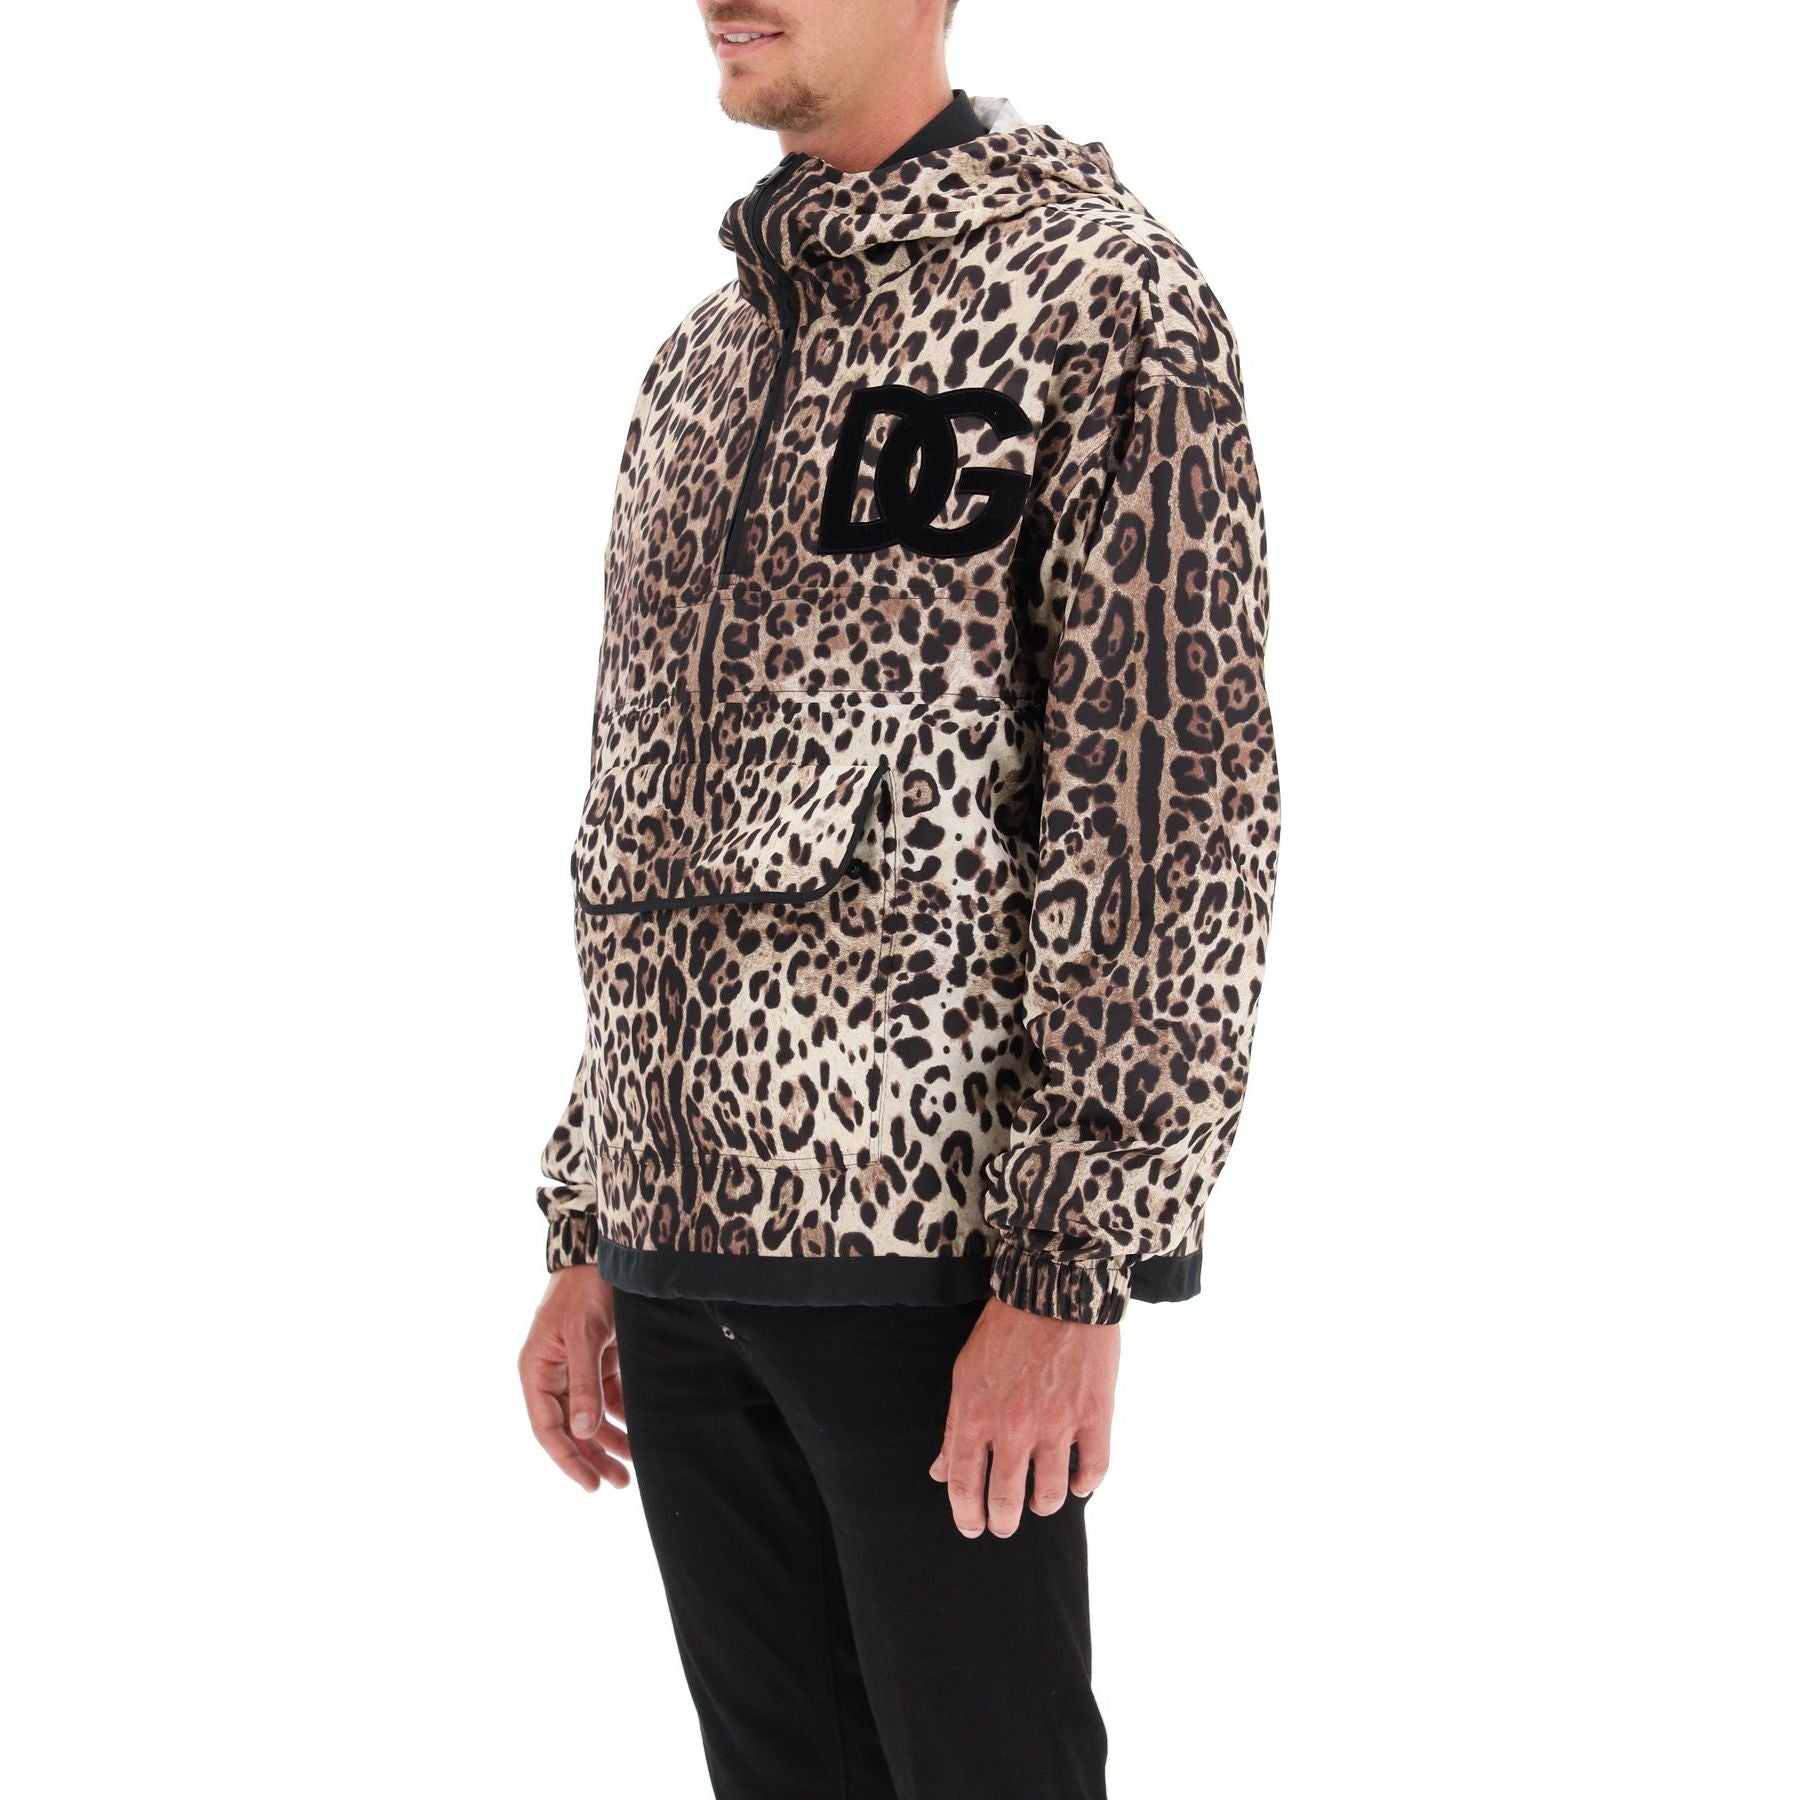 DG Leopard Print Jacket